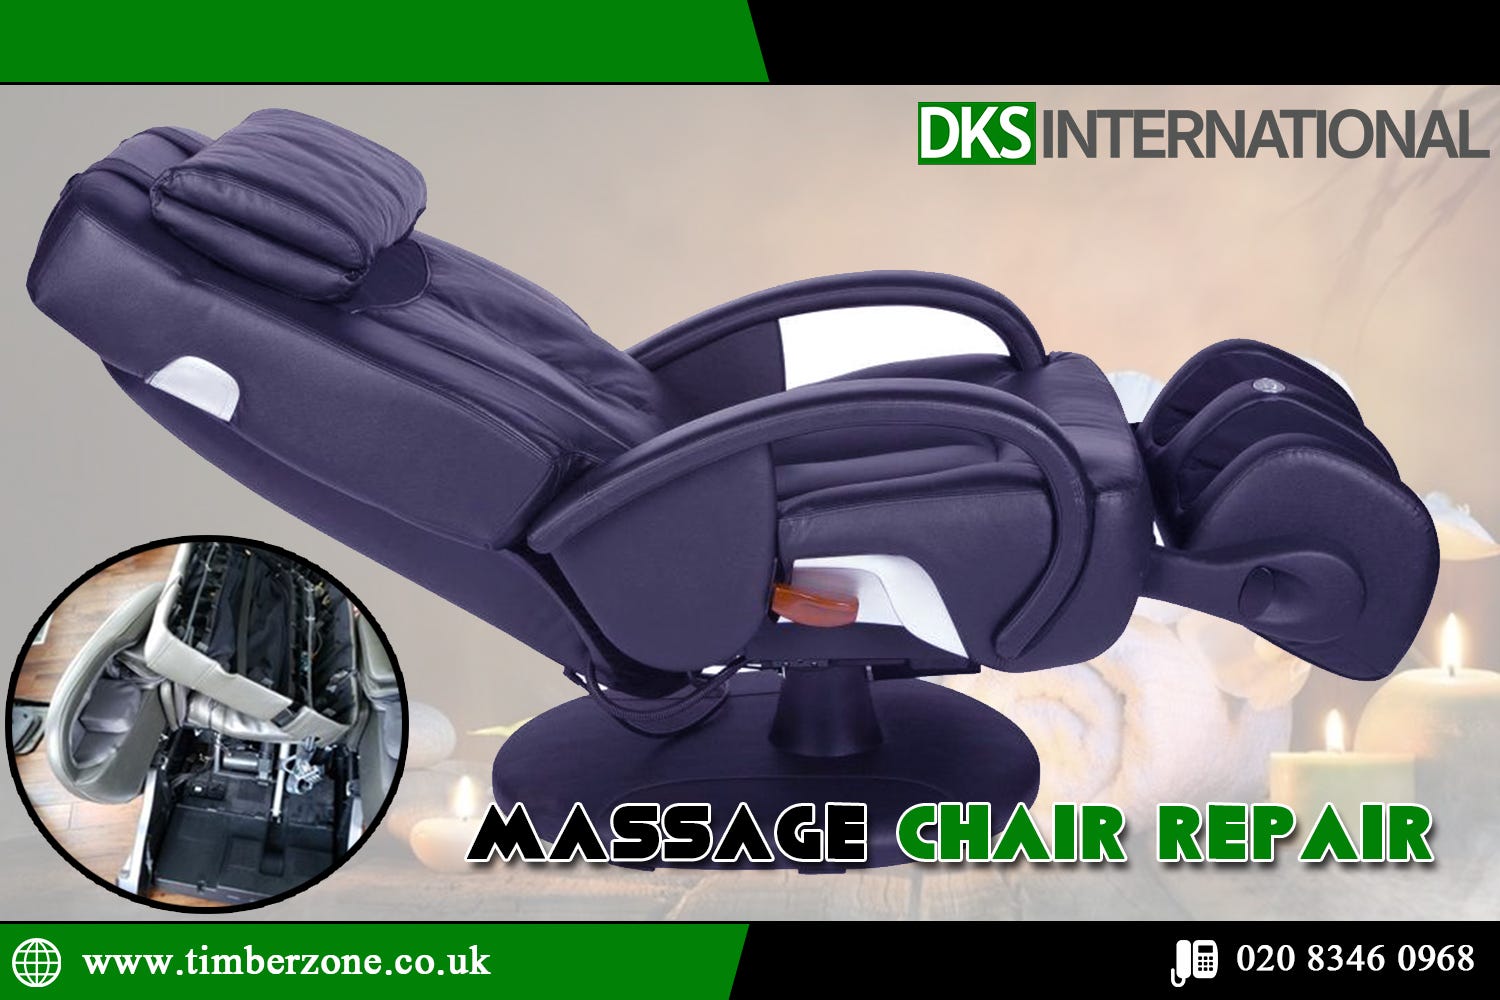 Get Massage Chair Repairing Service In Singapore Dks